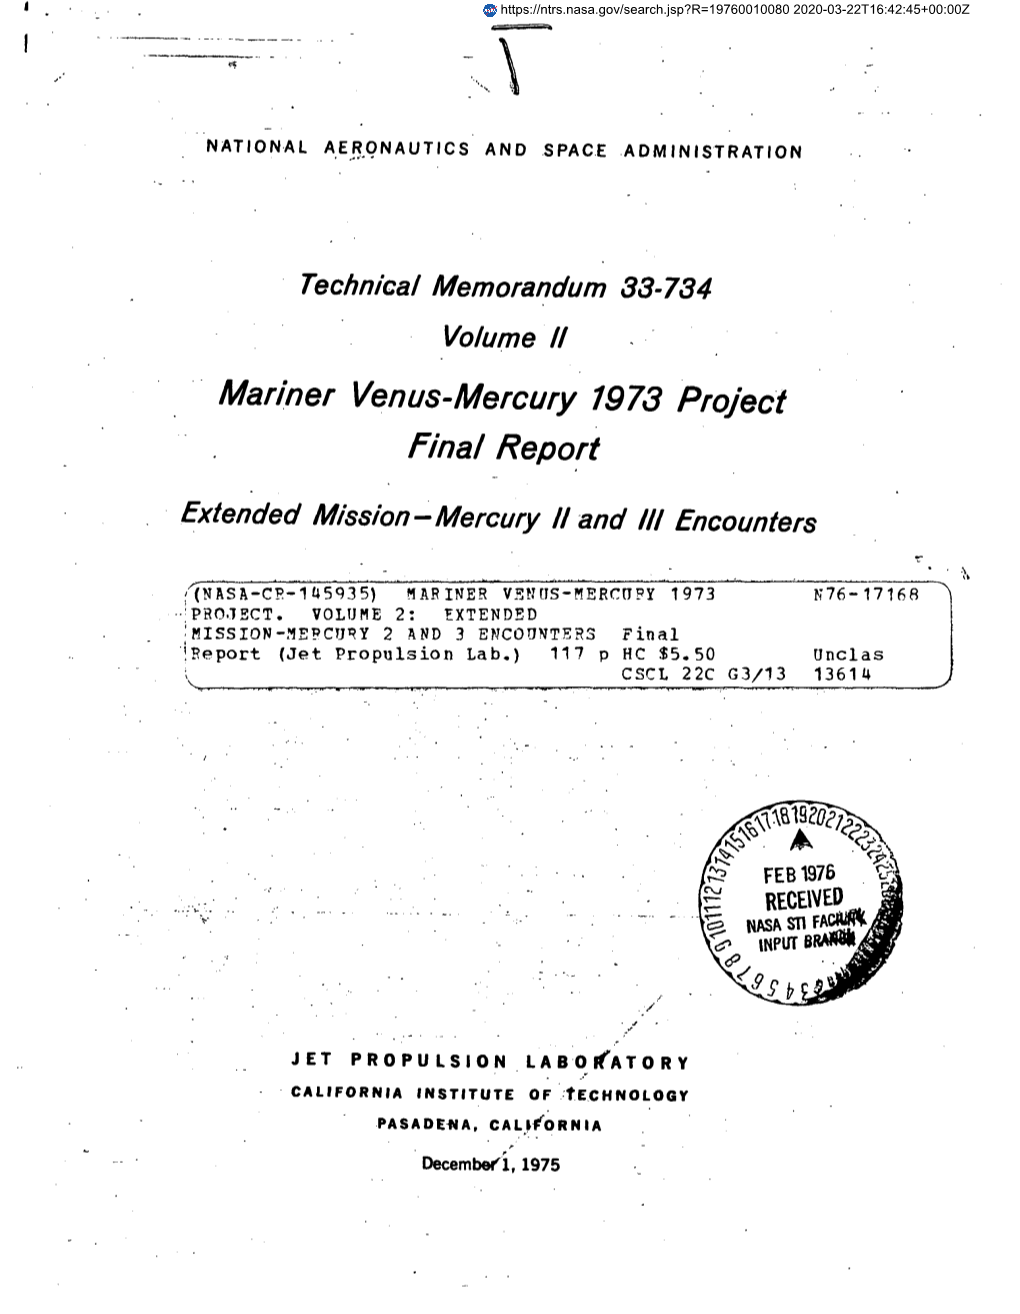 Mariner Venus-Mercury 1973 Project Final Report